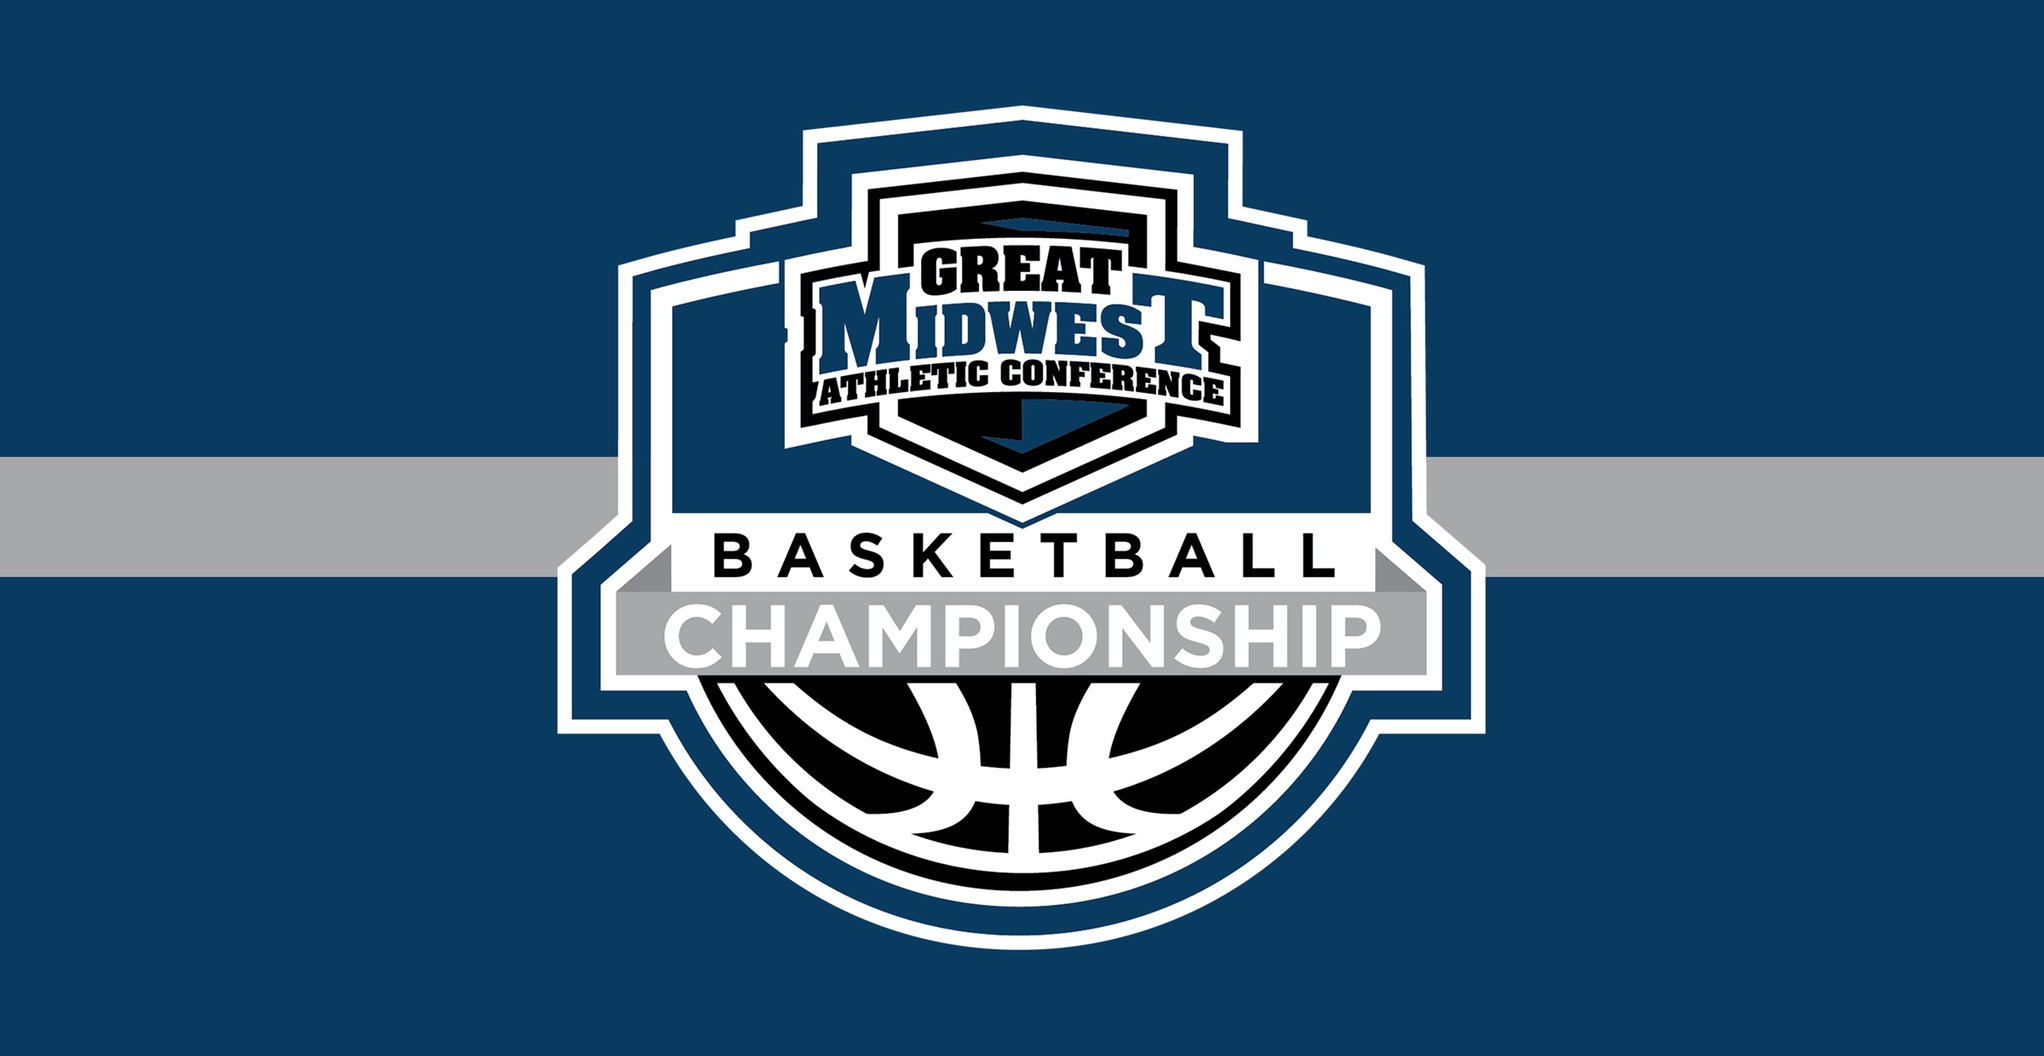 G-MAC basketball tournament logo